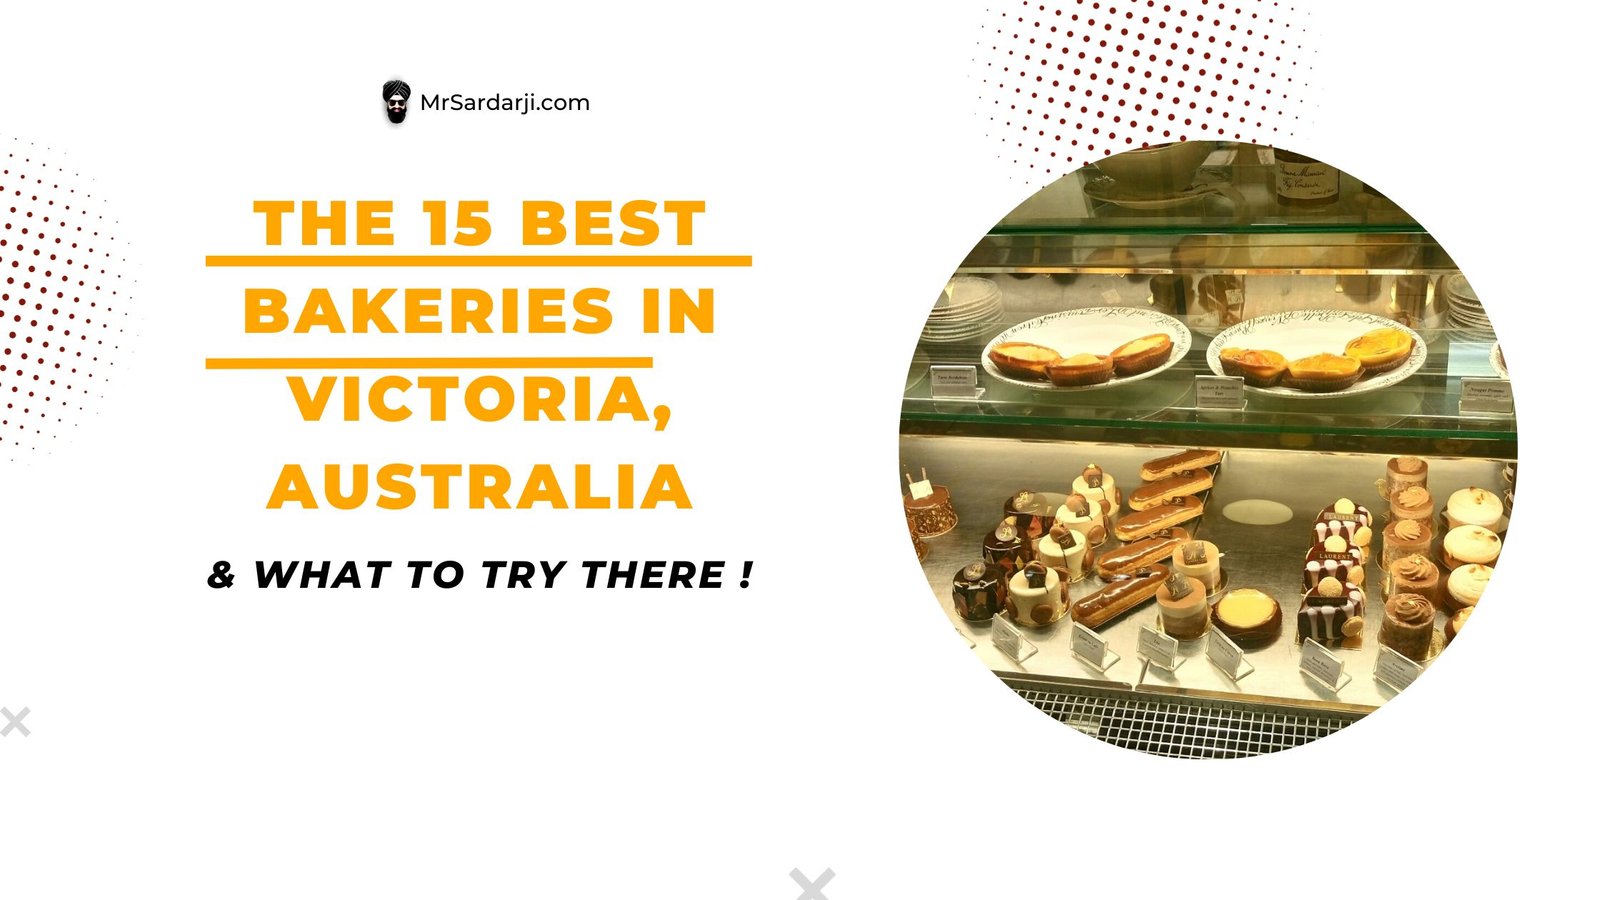 The 15 Best Bakeries in Victoria, Australia